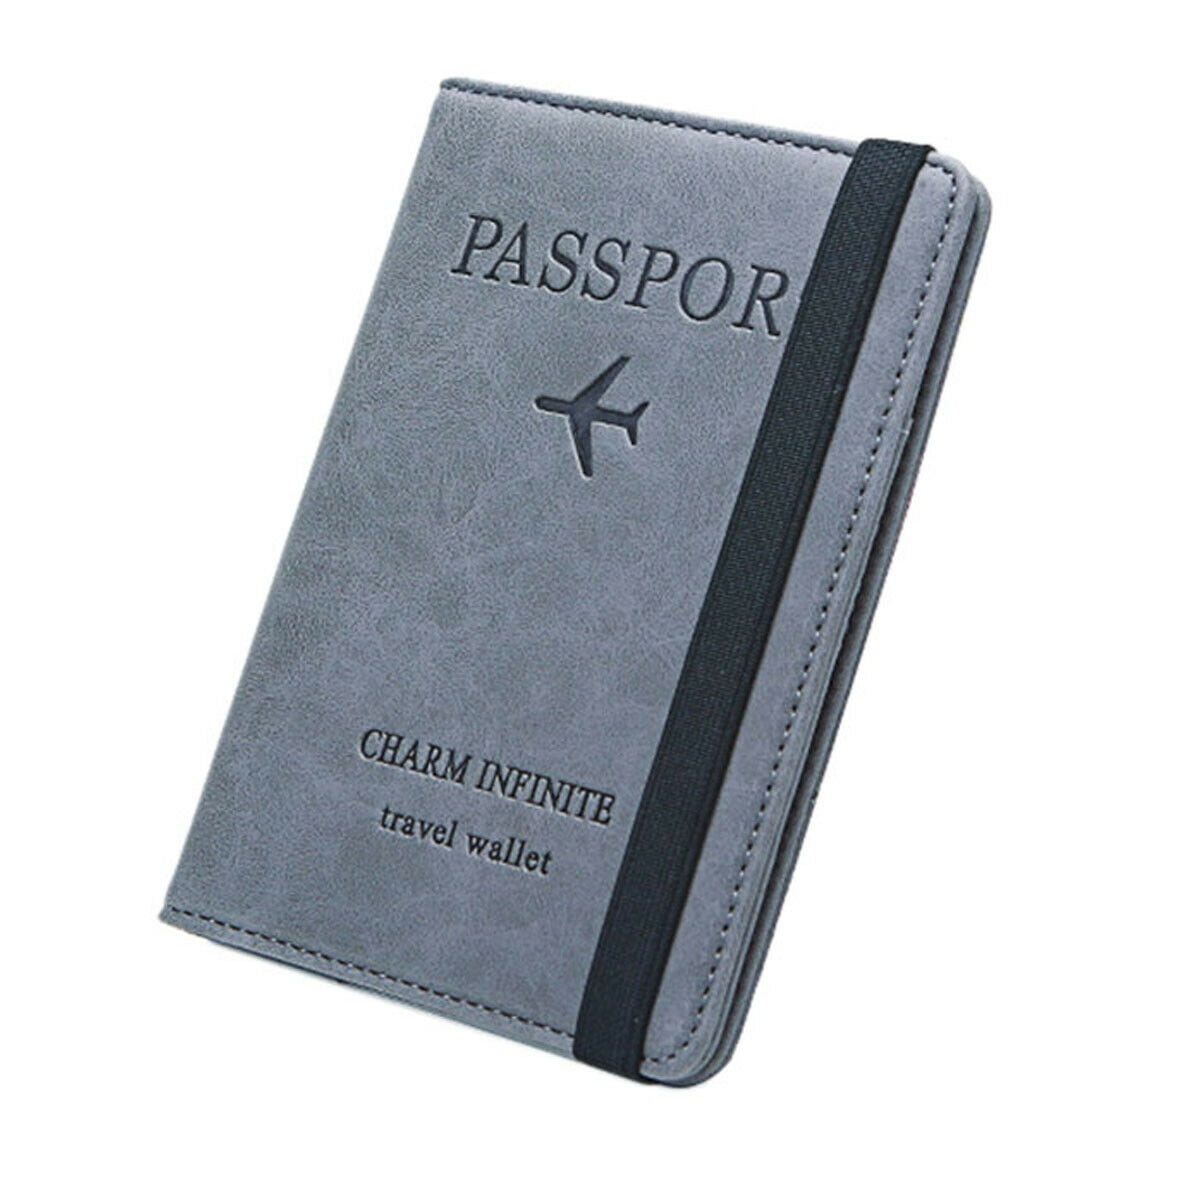 Star Wars Yoda Passport Holder Travel Wallet RFID Blocking PU Leather Card Case Cover Leather Document Organizer